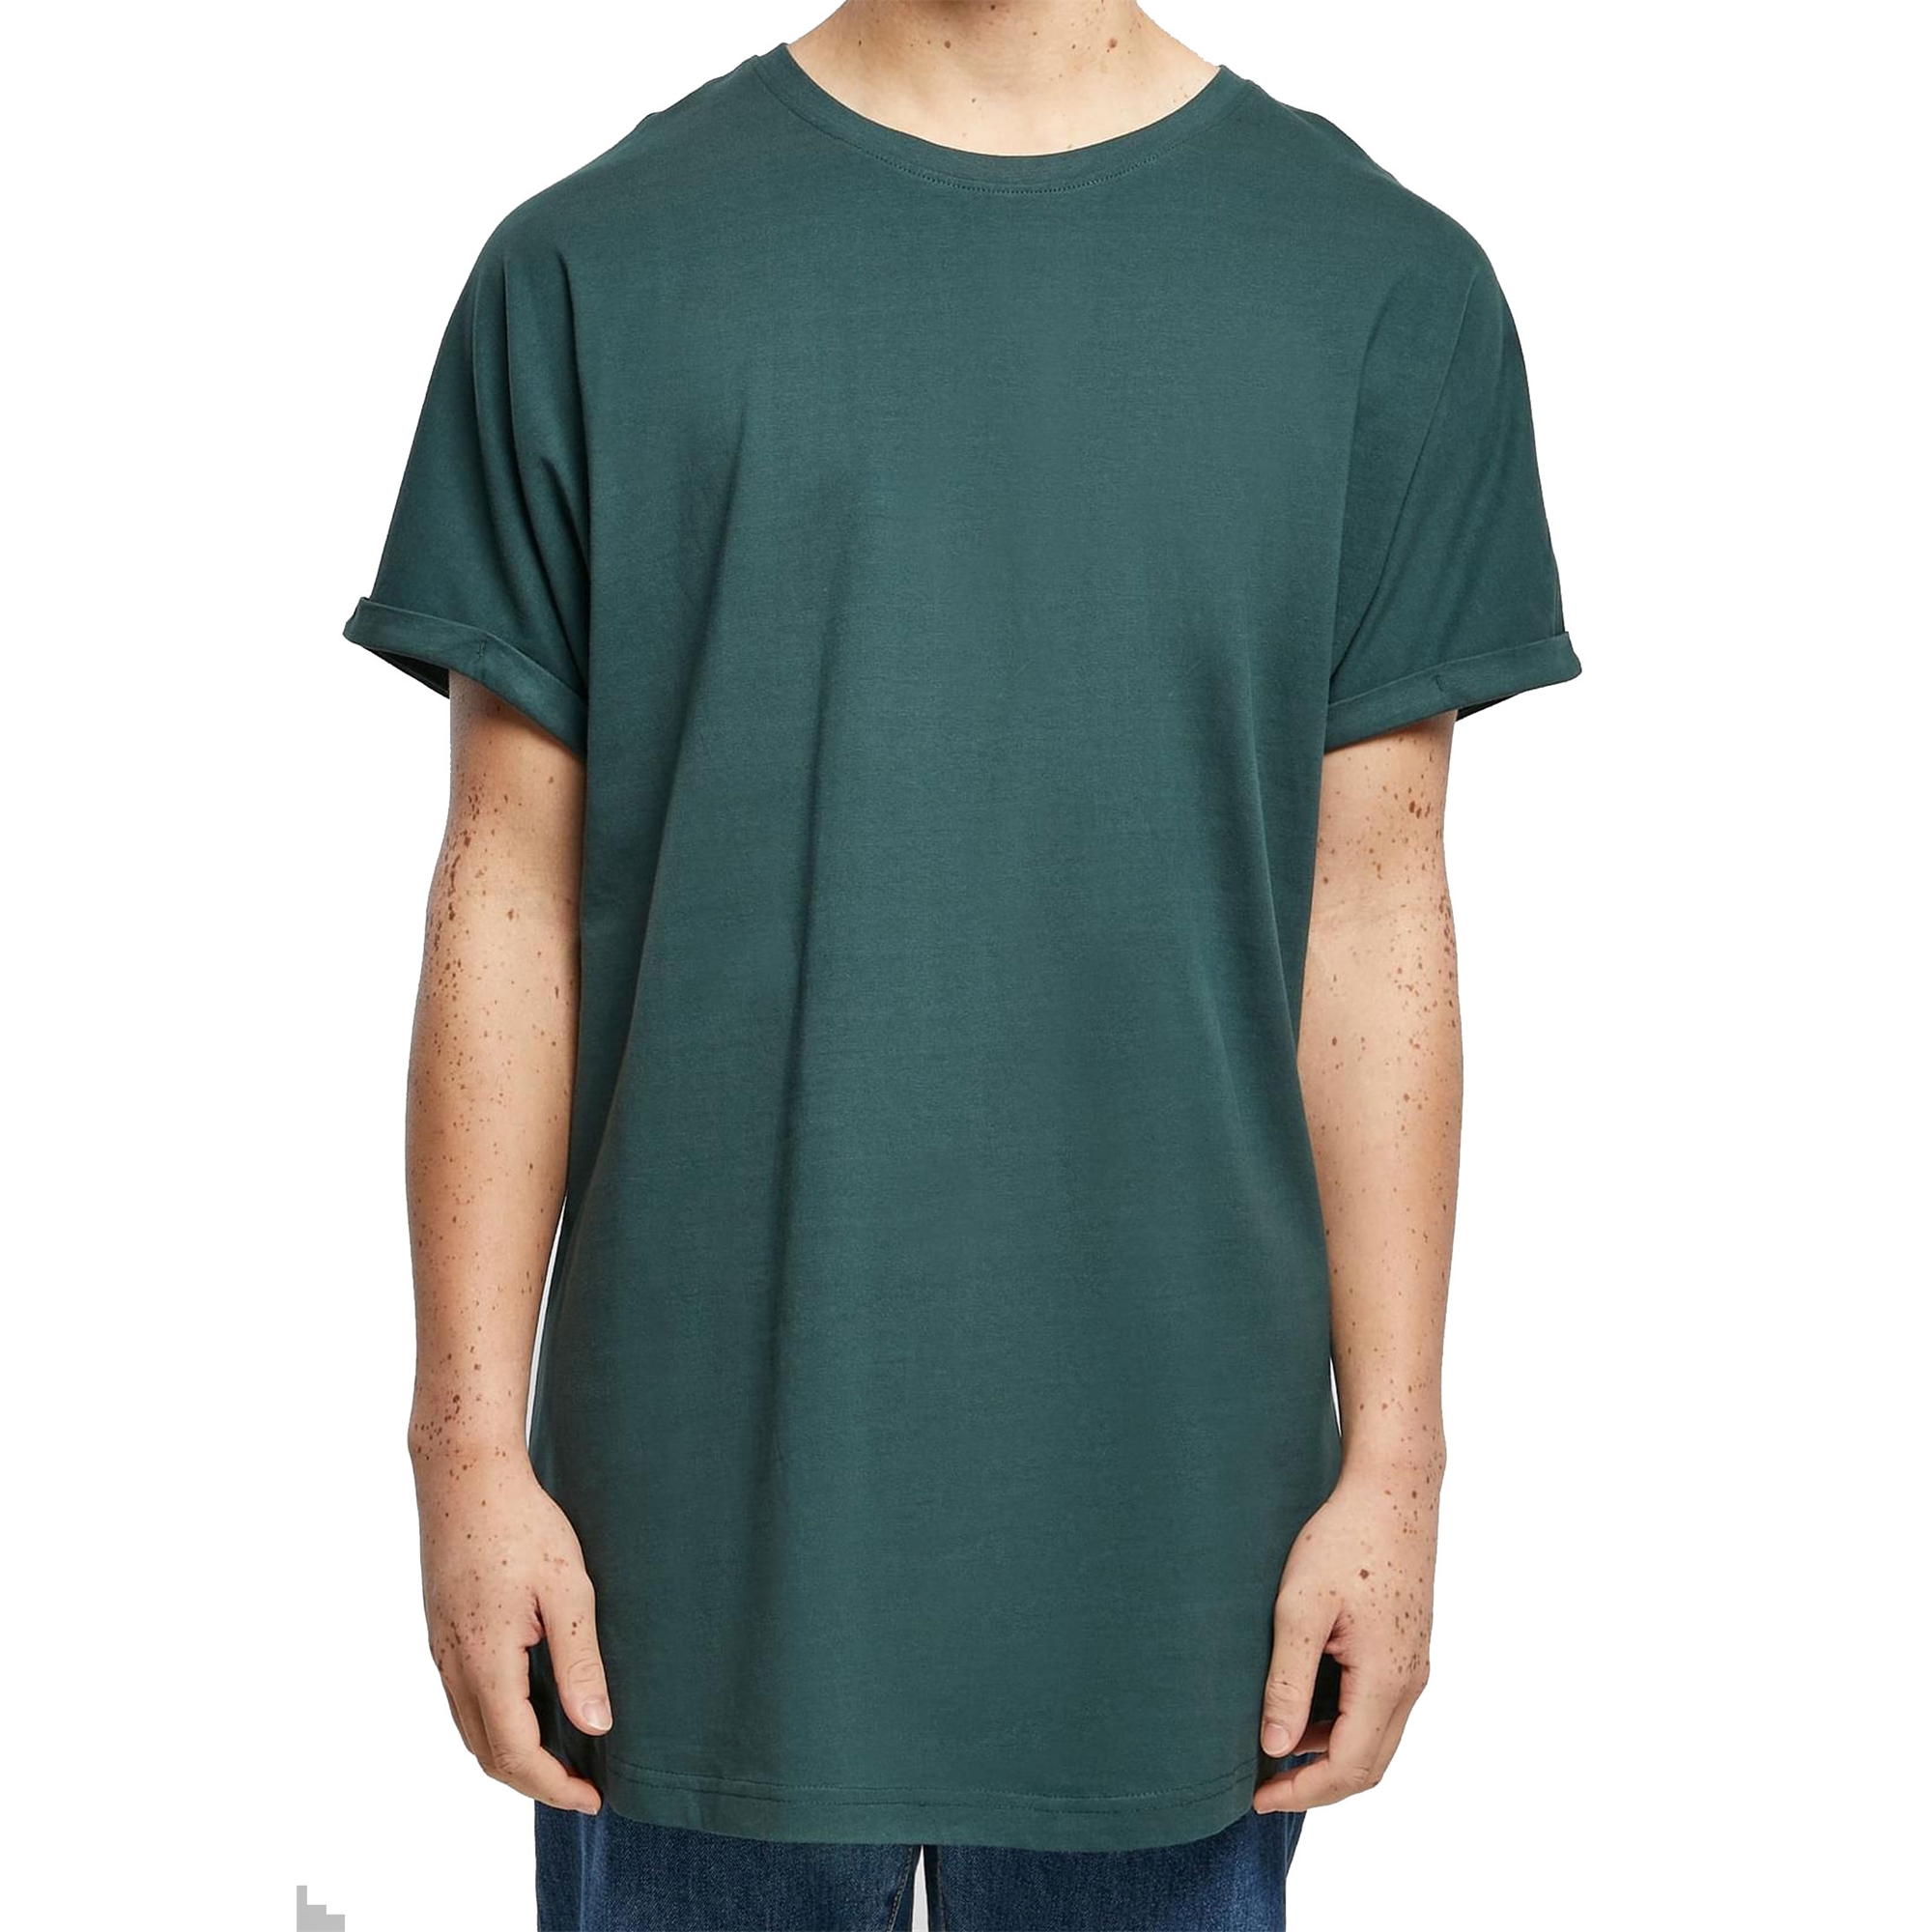 Classics Shirt Tee extra T-Shirt lang eBay Urban | Herren Turnup Shaped Long oversize